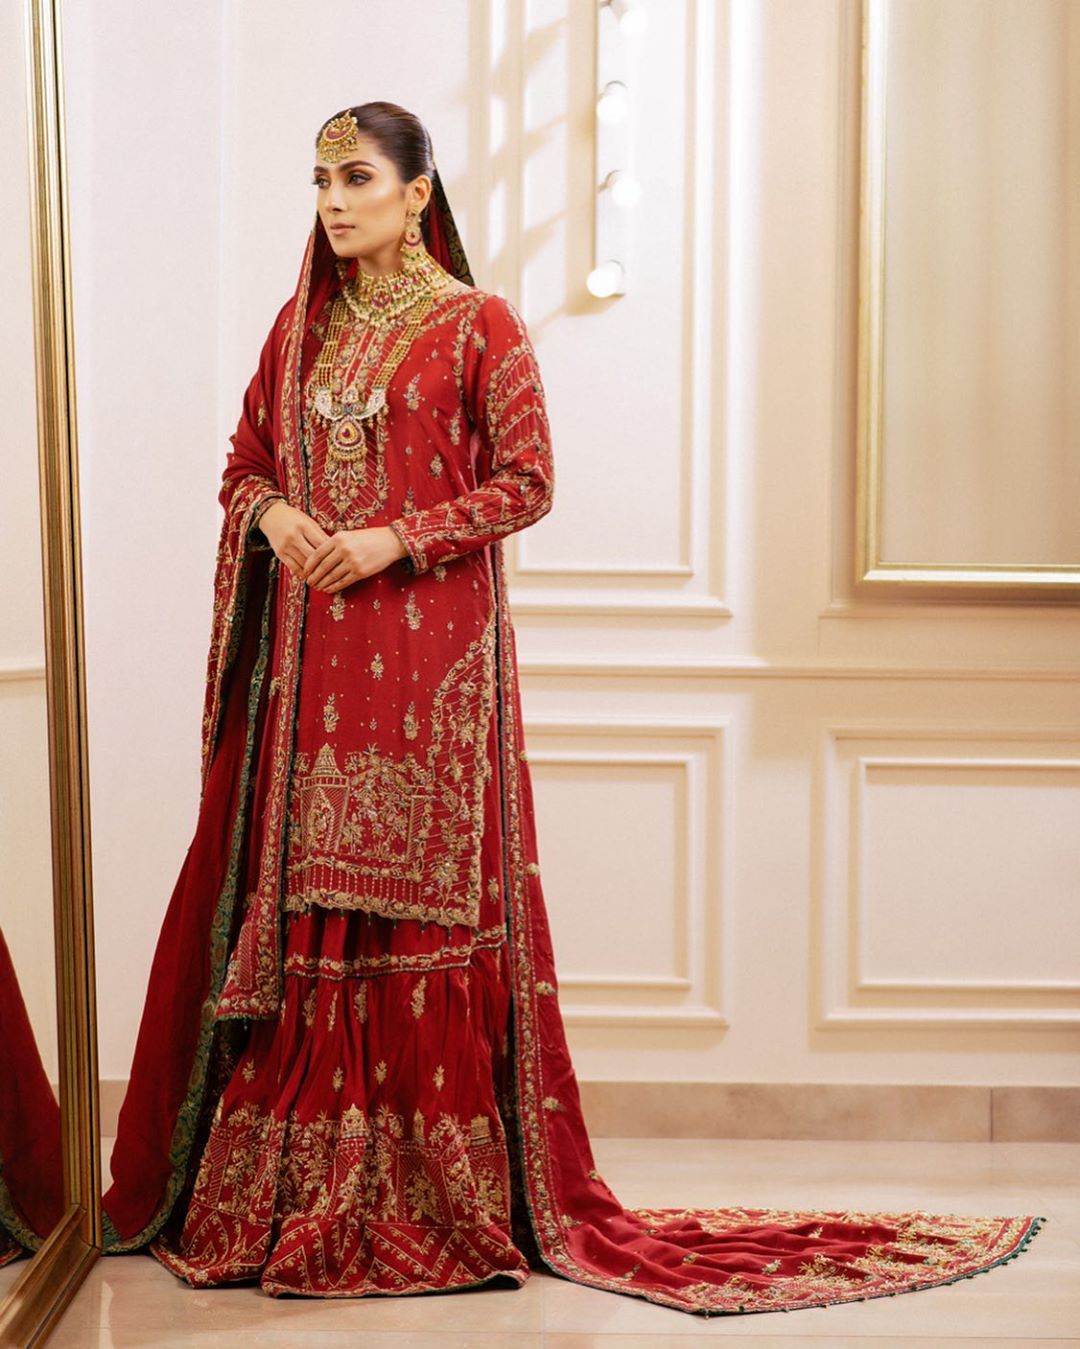 Beautiful Ayeza Khan Bridal Shoot for Bridal Couture "Zehnaseeb" by Zaaviay